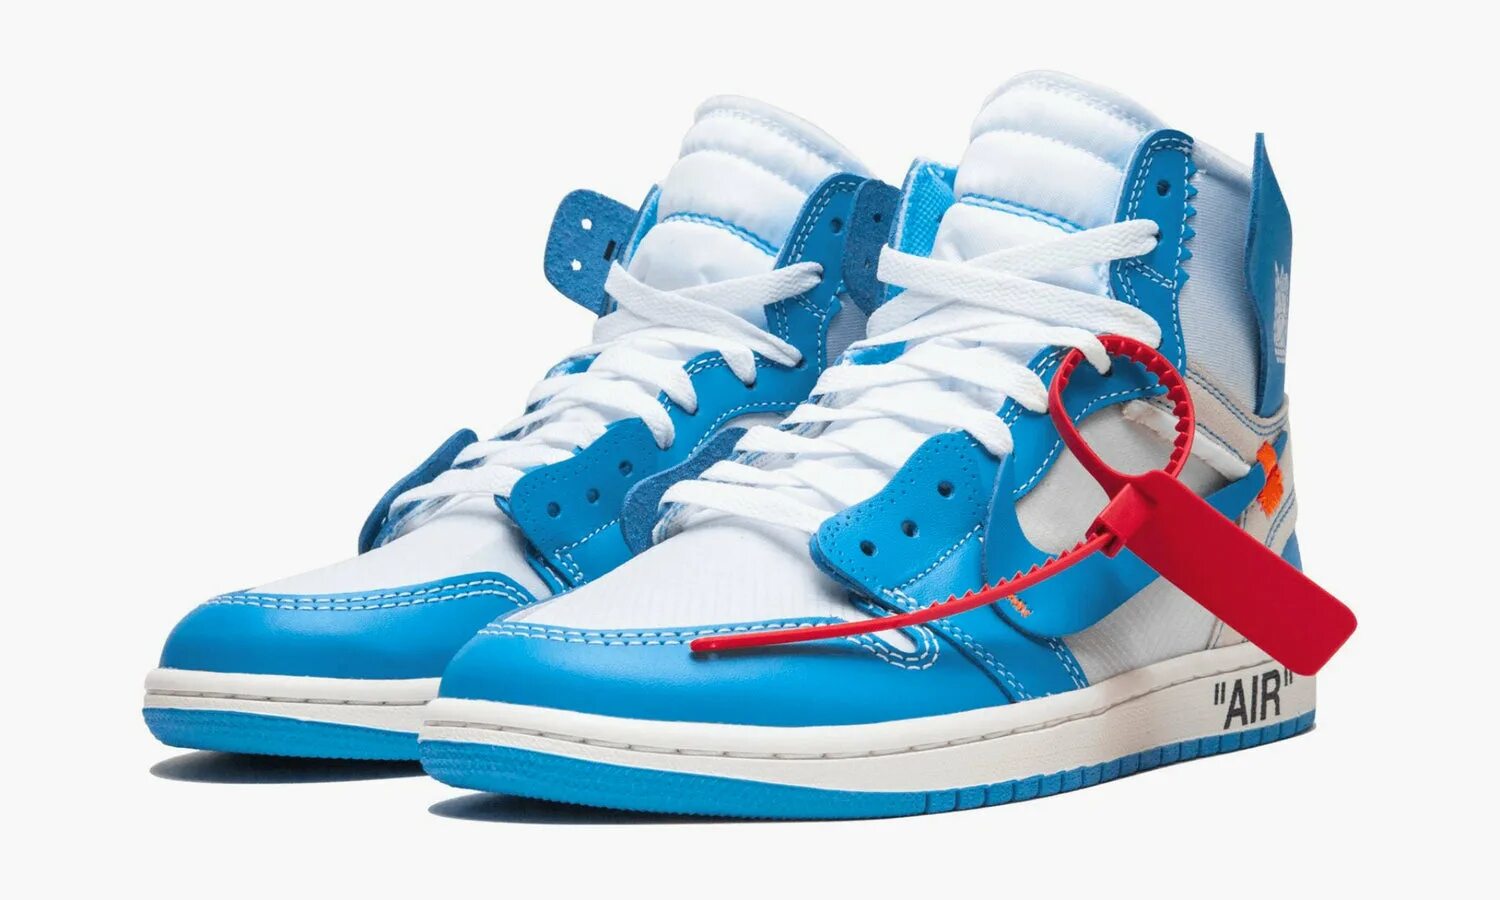 Nike Air Jordan 1 off White. Nike Air Jordan 1 Blue White. Nike Jordan 1 off White. Nike Air Jordan 1 High off White Blue. Кроссовки nike air jordan 1 x